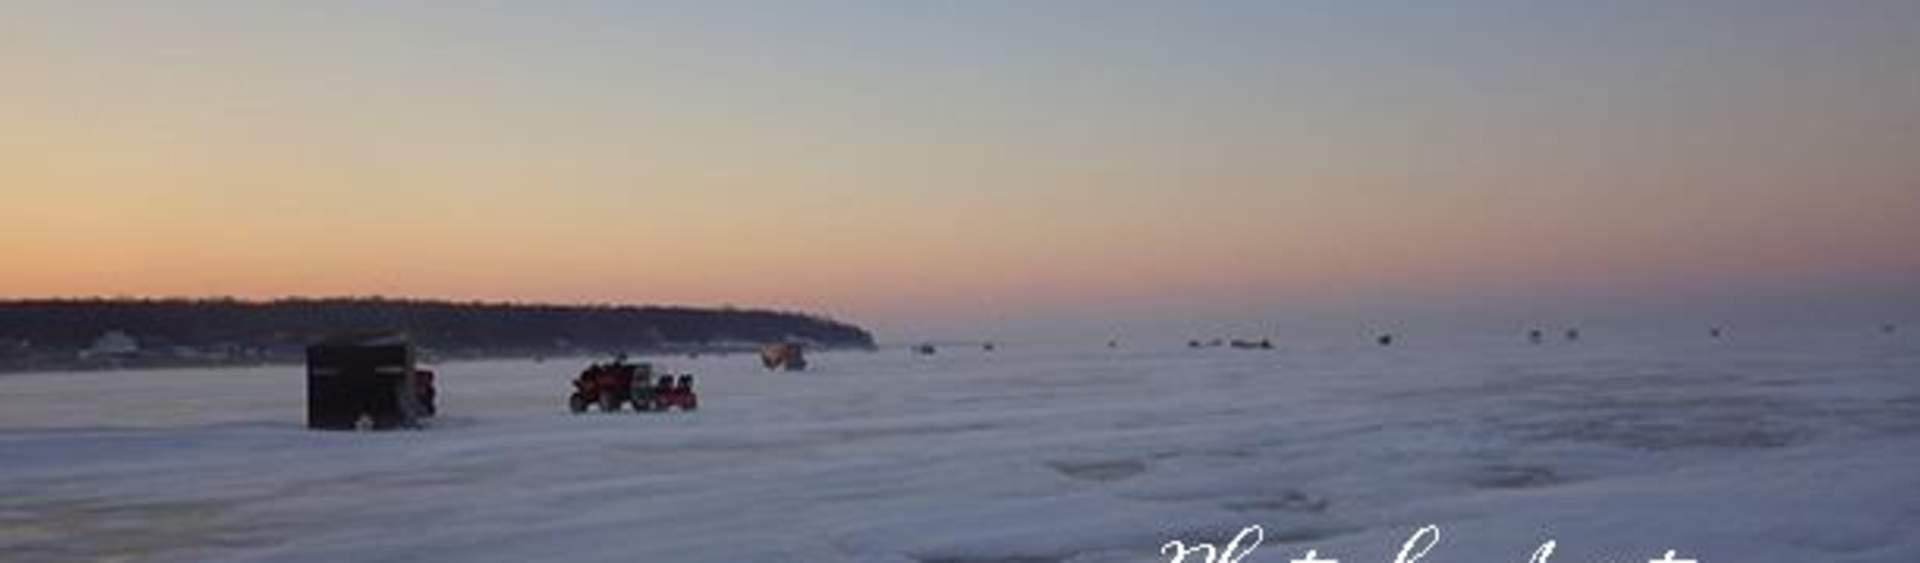 Ice Fishing Shanty Rentals - Tite Line Fishing Charters